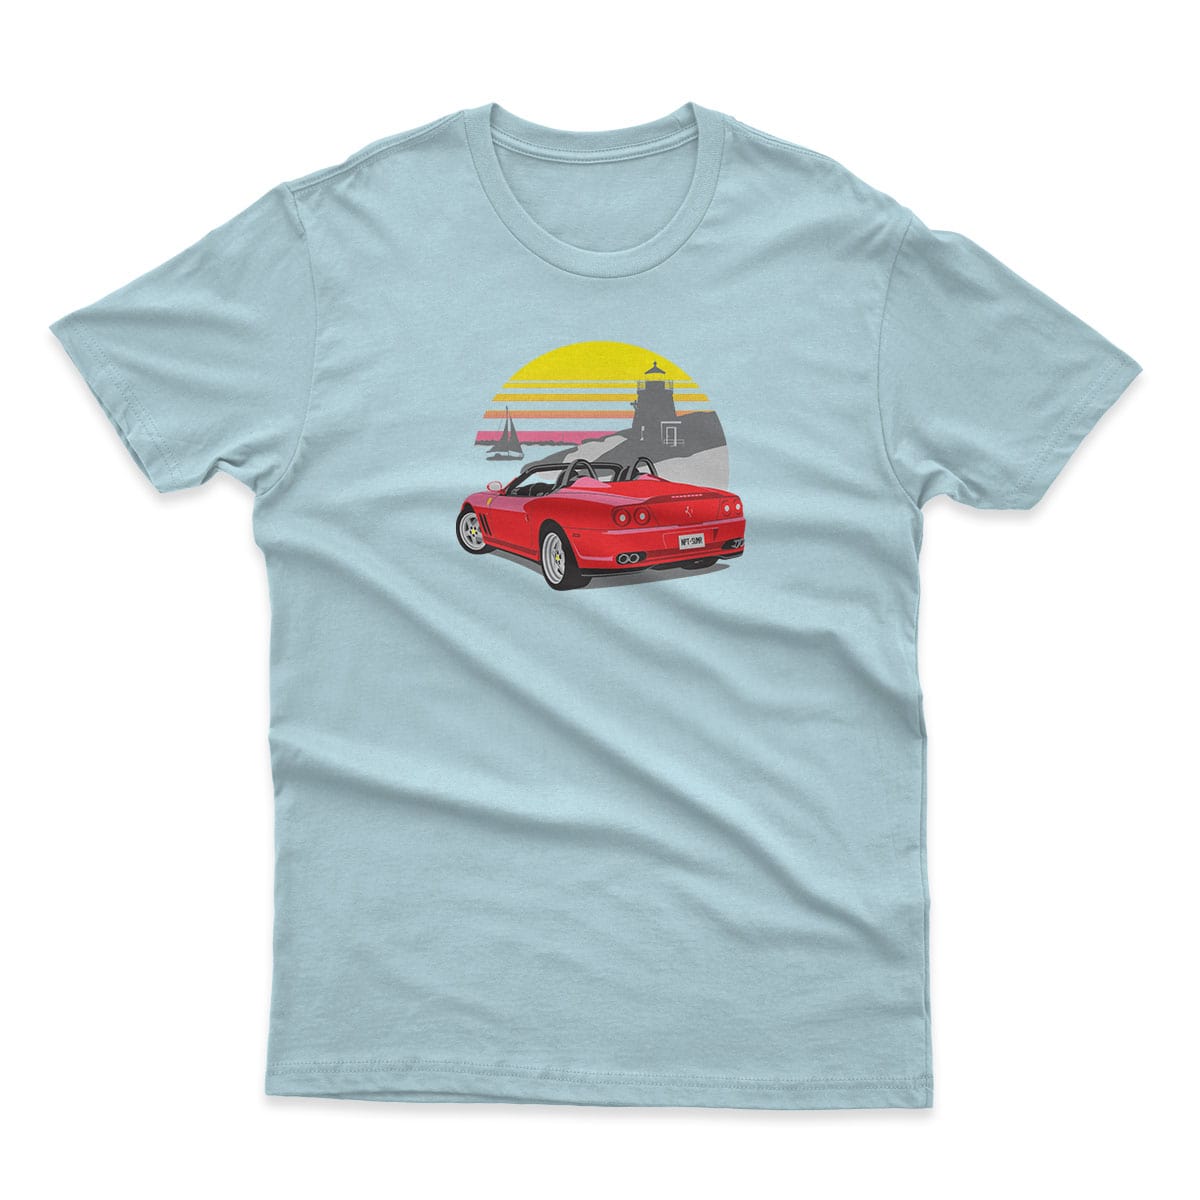 Outrun The Sun - A collector Italian roadster summer car enthusiast shirt |  blipshift